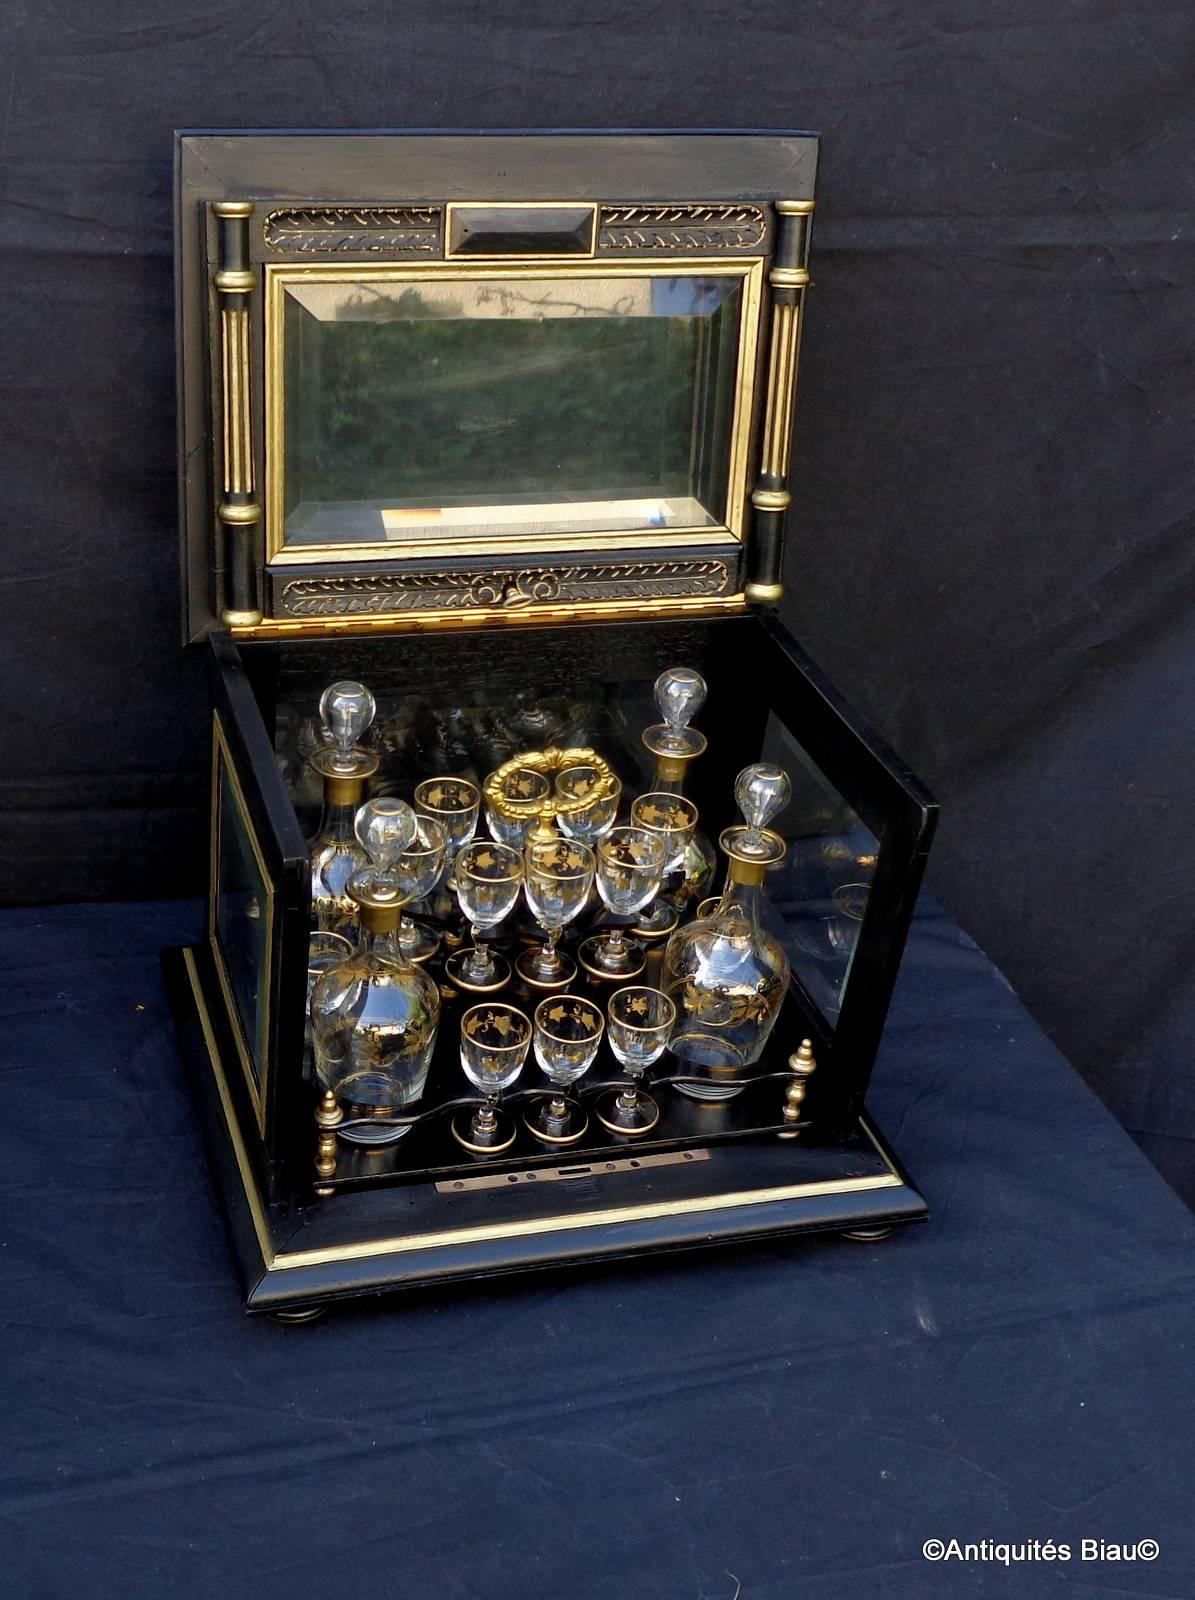 Tantalus Liquor Box with Glasses in Black and Gold, 19th Century, Napoleon III 2